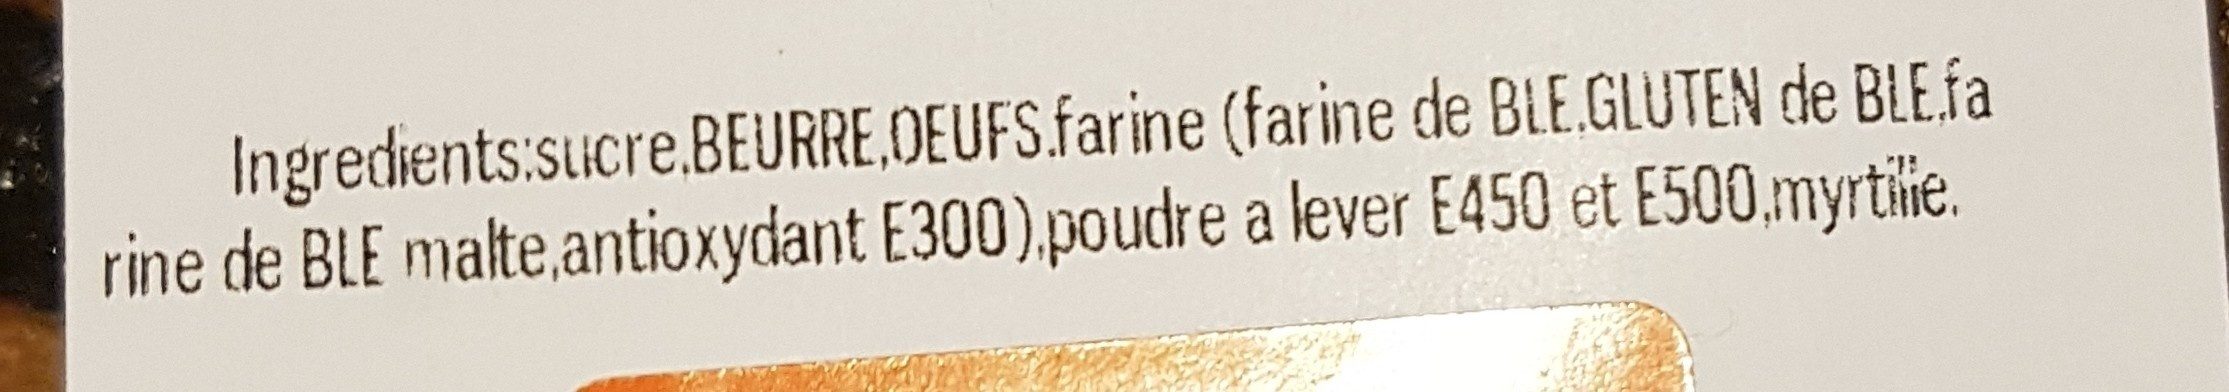 Cake aux myrtilles - Ingredients - fr